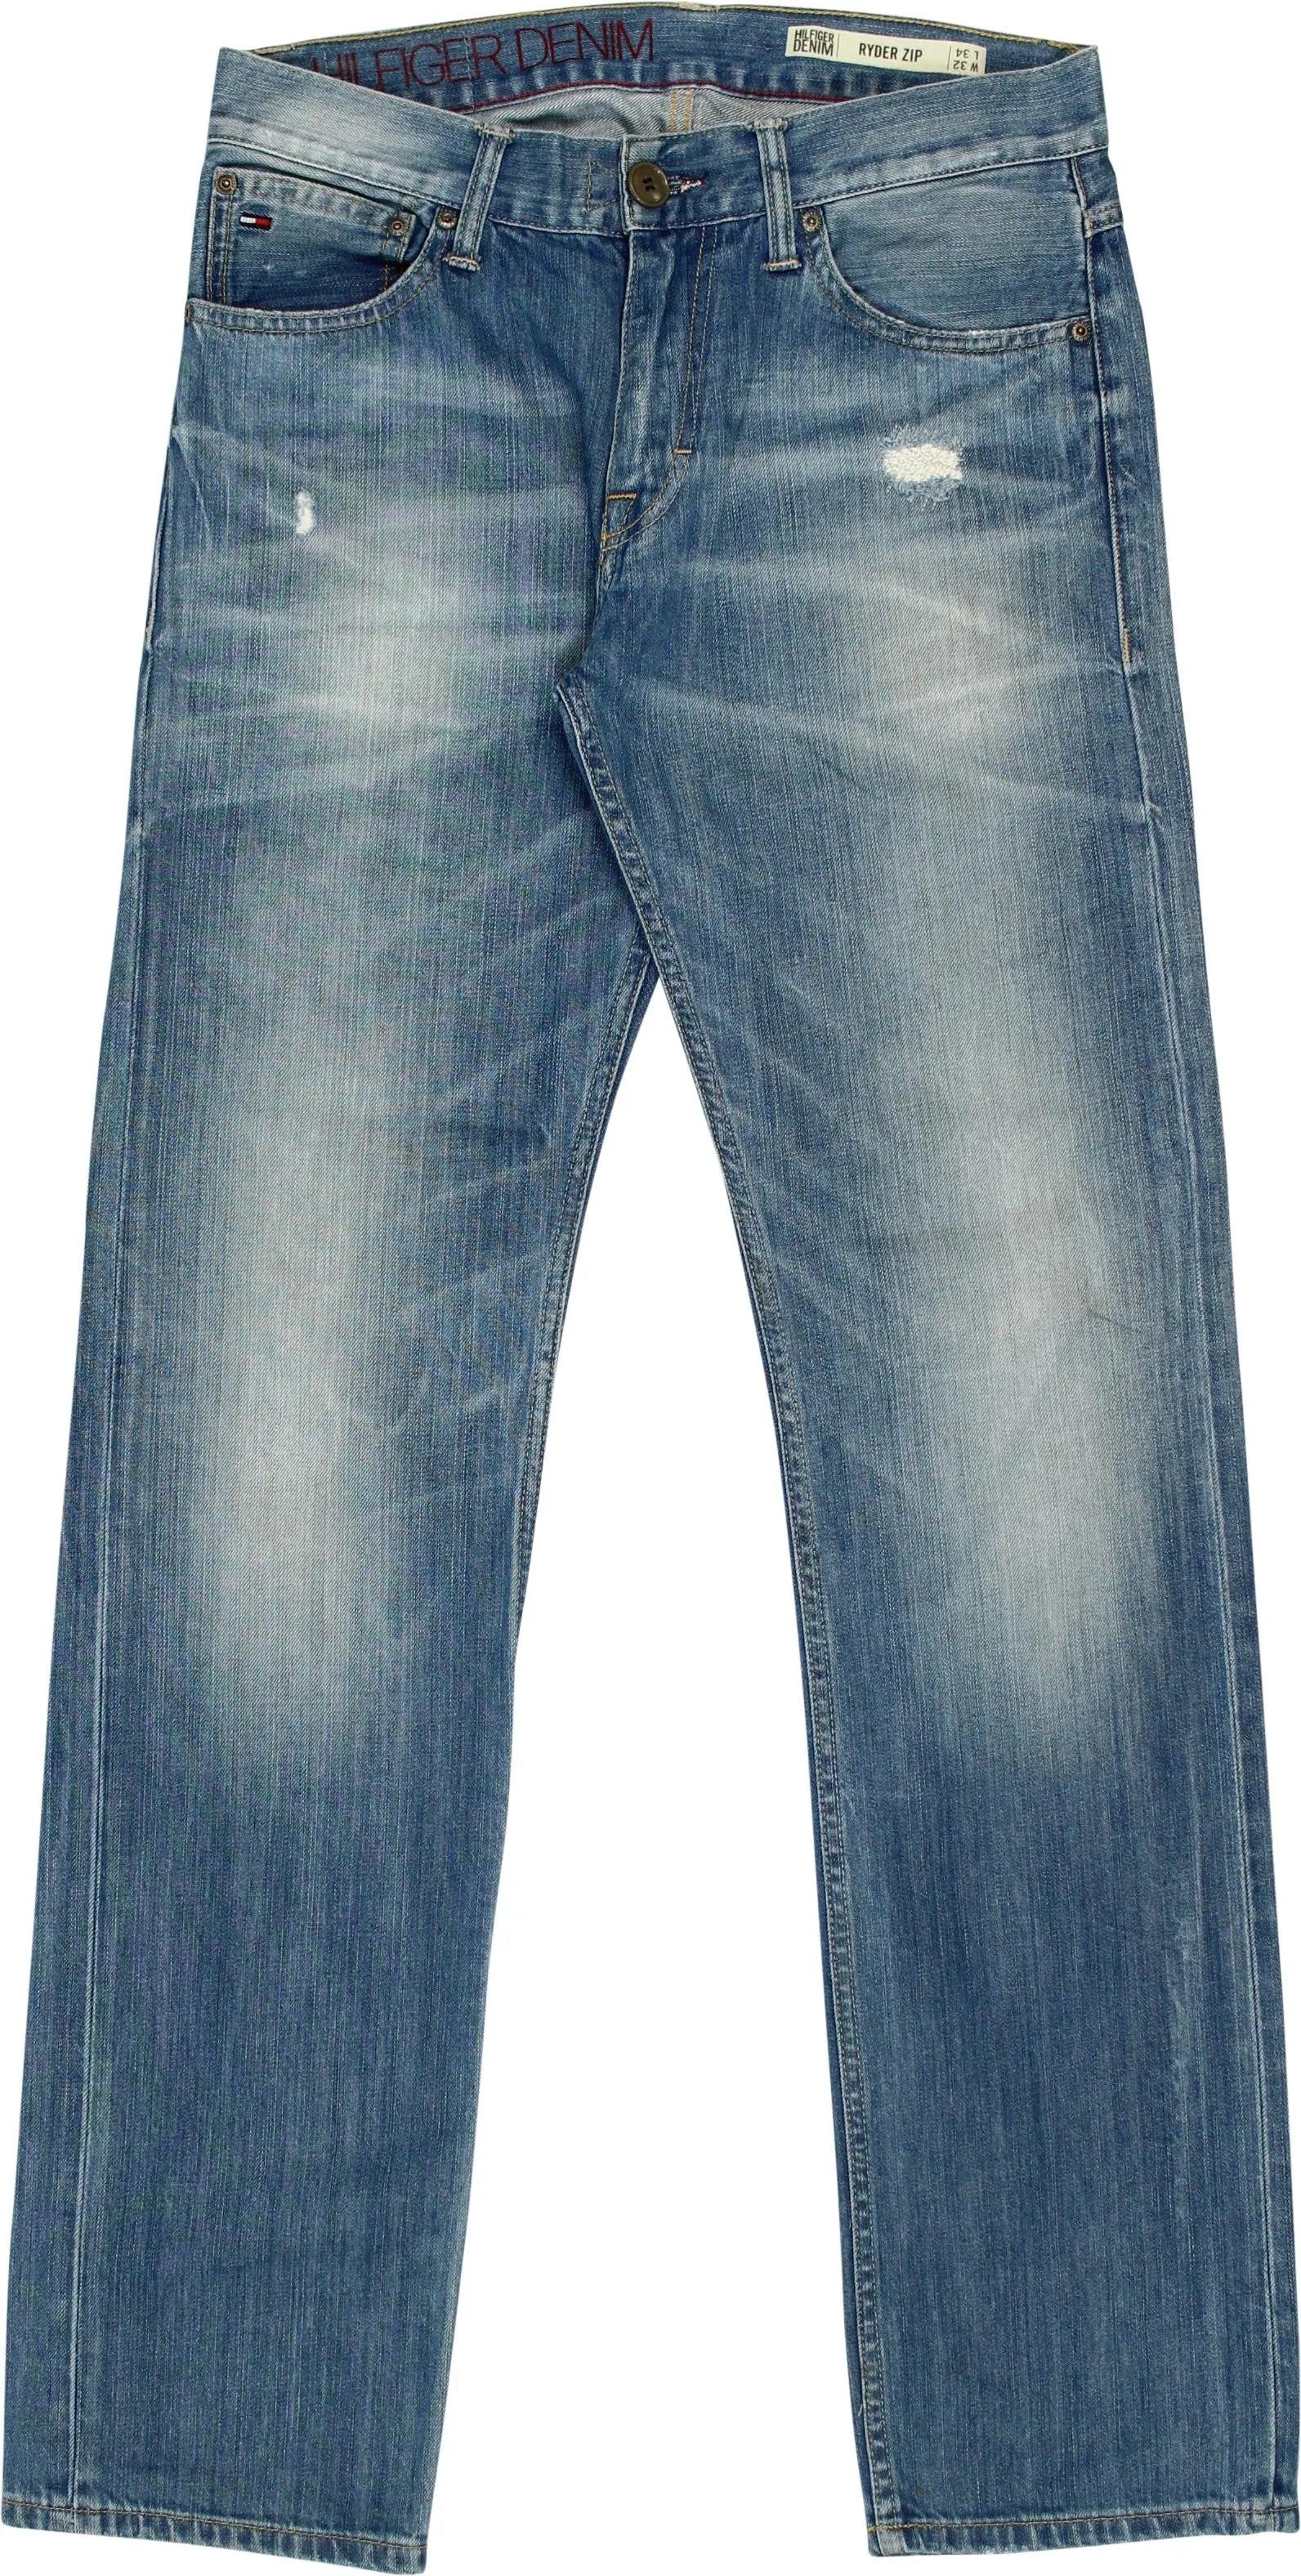 Tommy Hilfiger - Regular Fit Jeans by Tommy Hilfiger- ThriftTale.com - Vintage and second handclothing